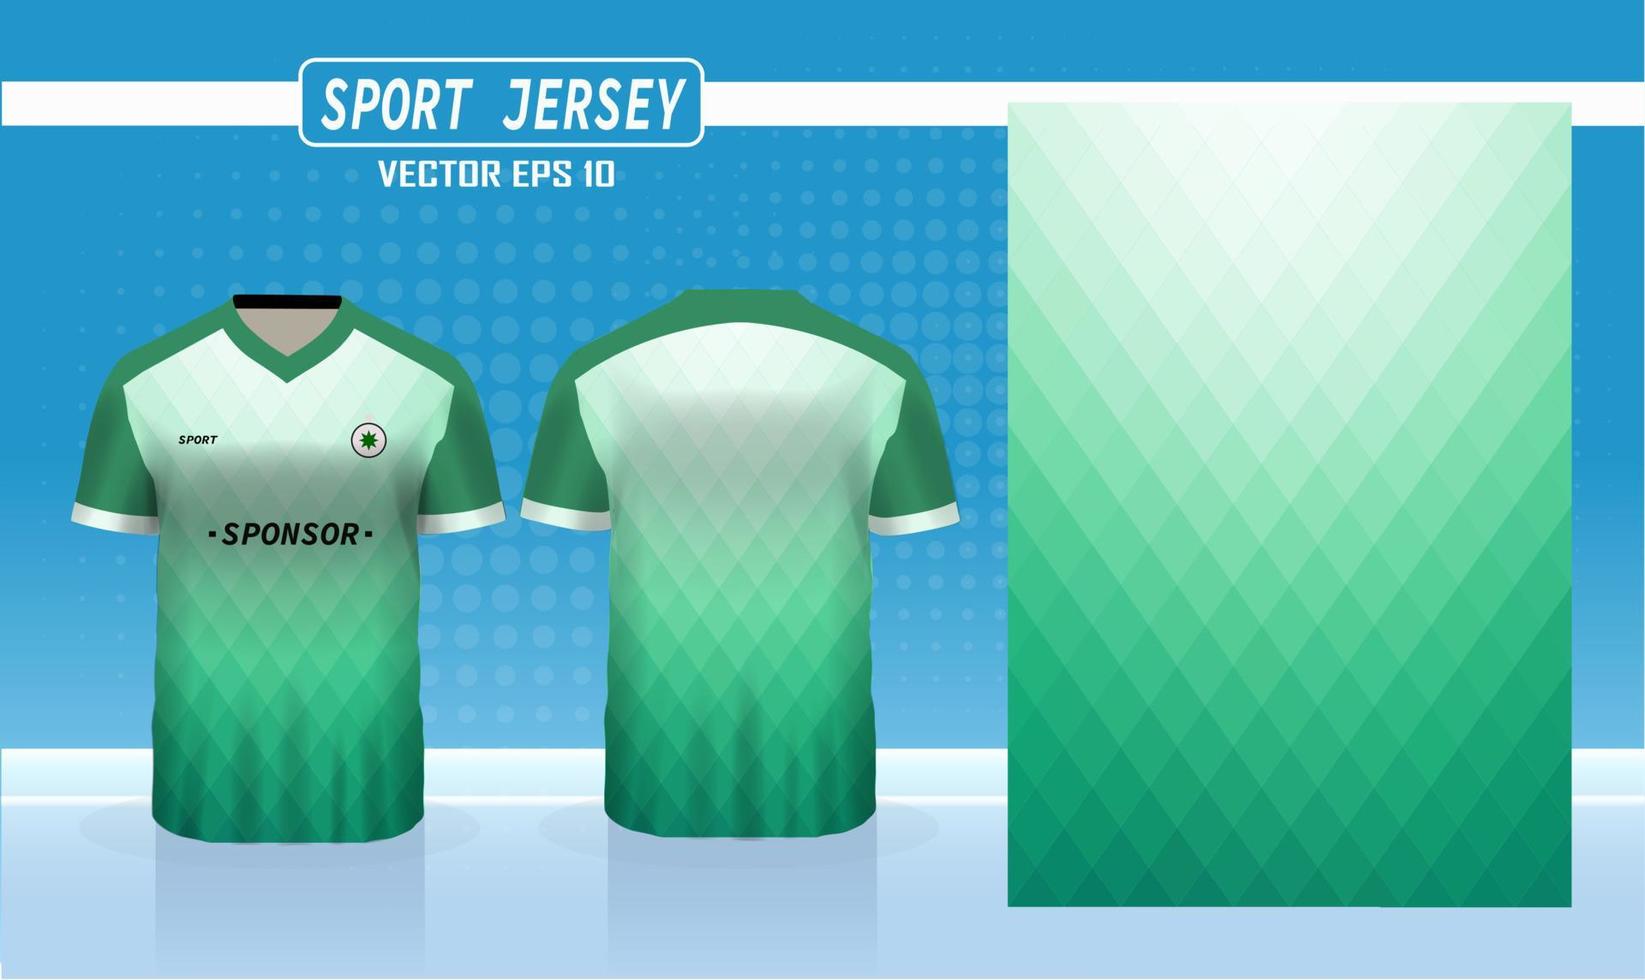 camisa esportiva e modelo de camiseta maquete de vetor de design de camisa esportiva. design esportivo para futebol, badminton, corrida, camisa de jogos.